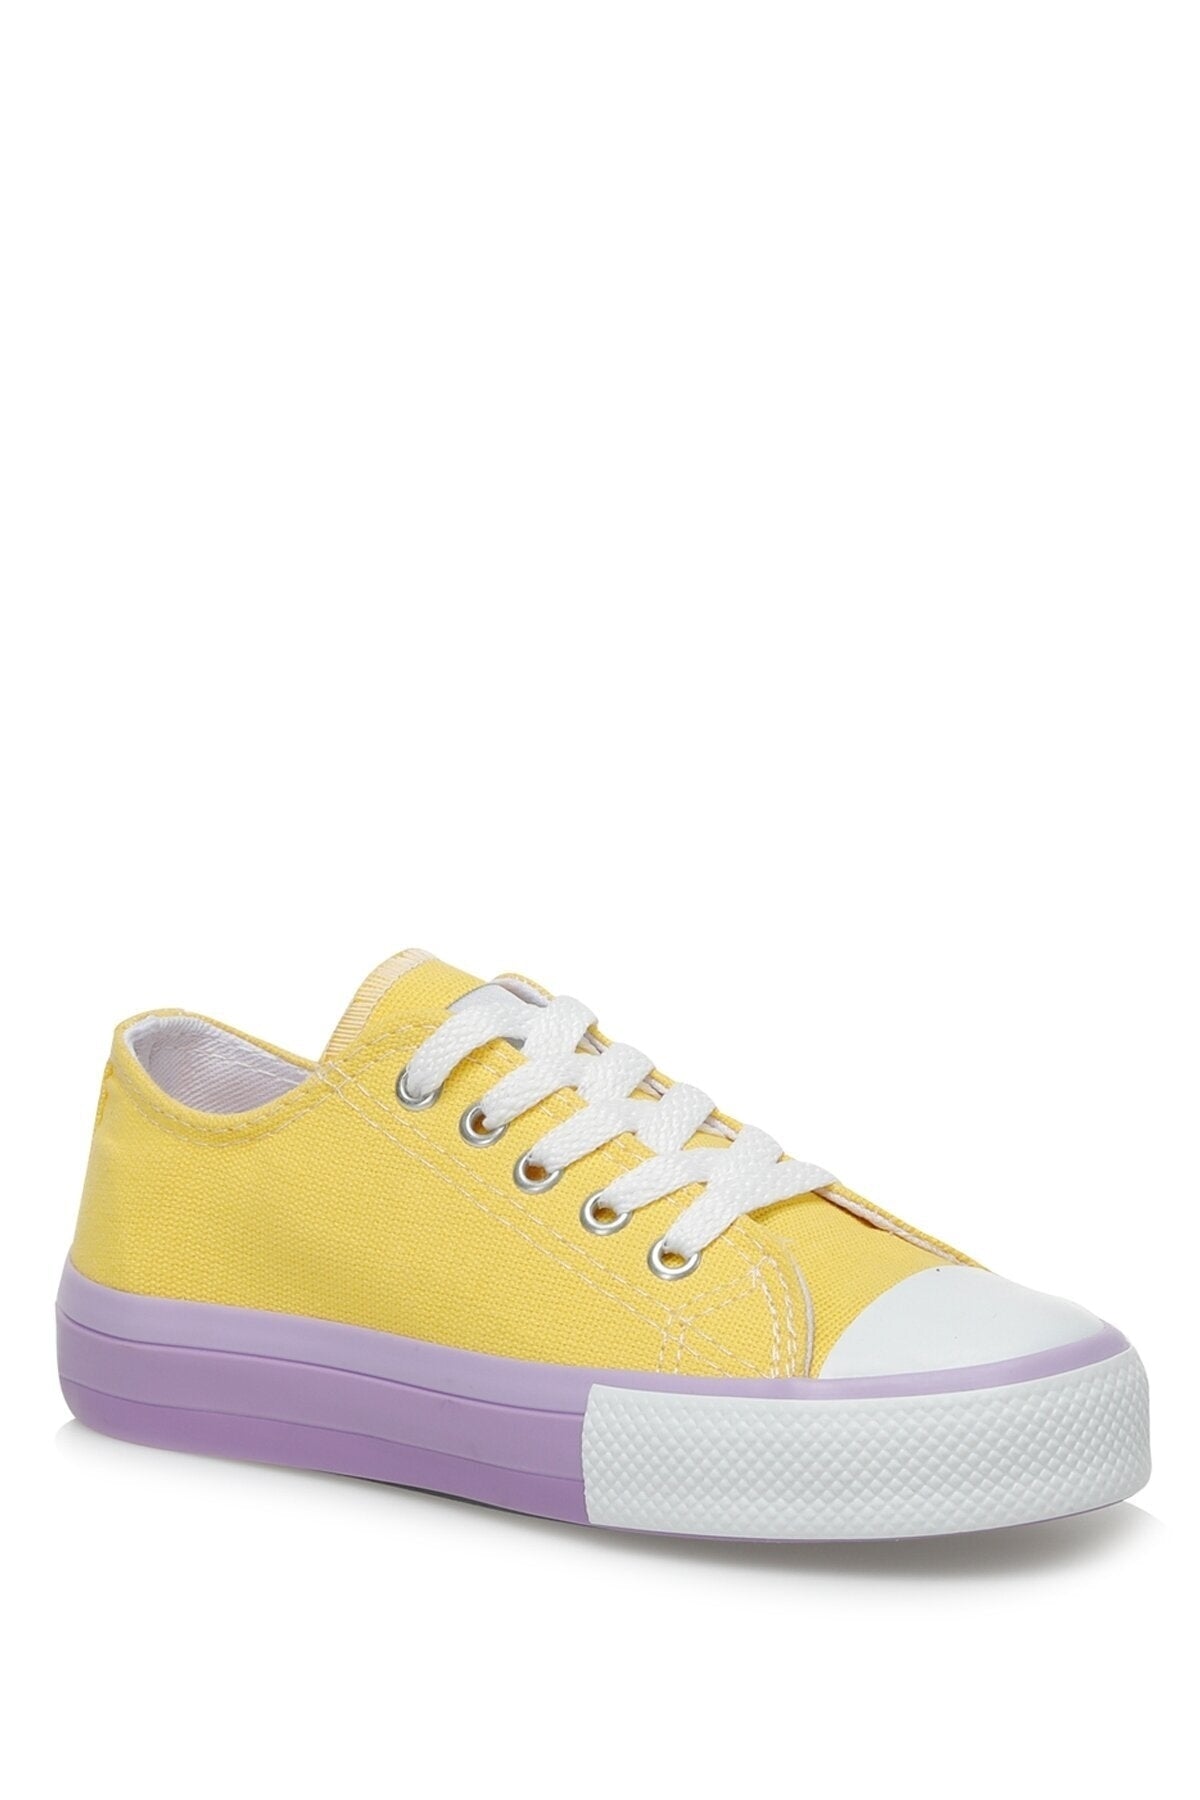 Conte F 3fx Yellow Girls' Sneaker